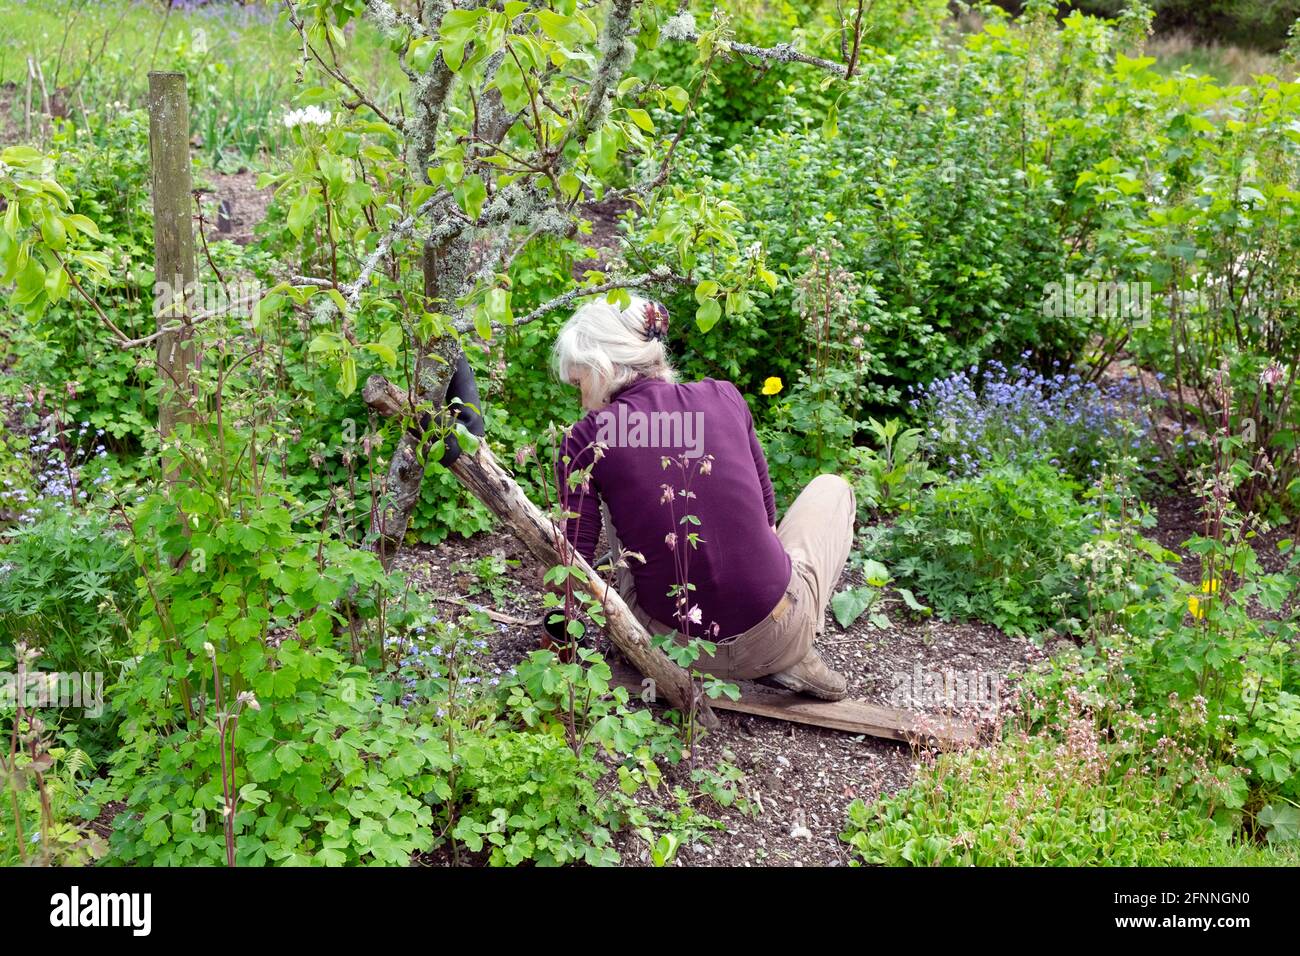 Older senior woman seventies wearing purple top crouching weeding gardening in fruit vegetable veg May 2021 garden Wales UK Great Britain KATHY DEWITT Stock Photo